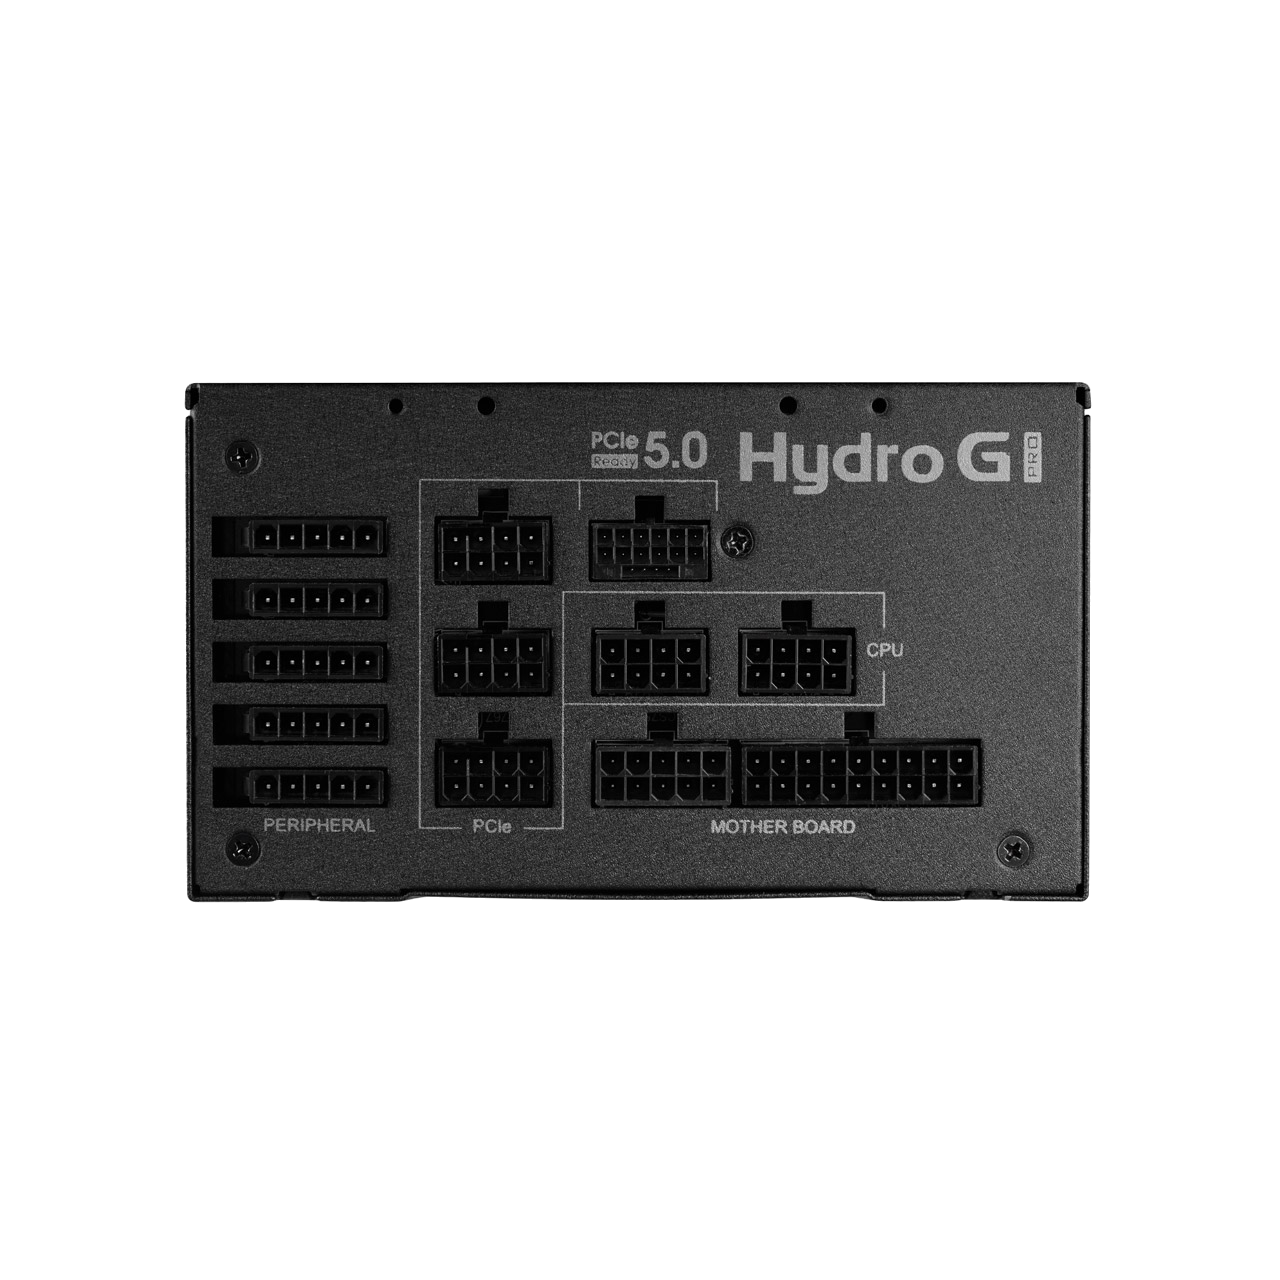 FSP Hydro G Pro 1000W 80+ Gold (PCIe 5.0) Fully Modular Power Supply | PPA10A2415 |